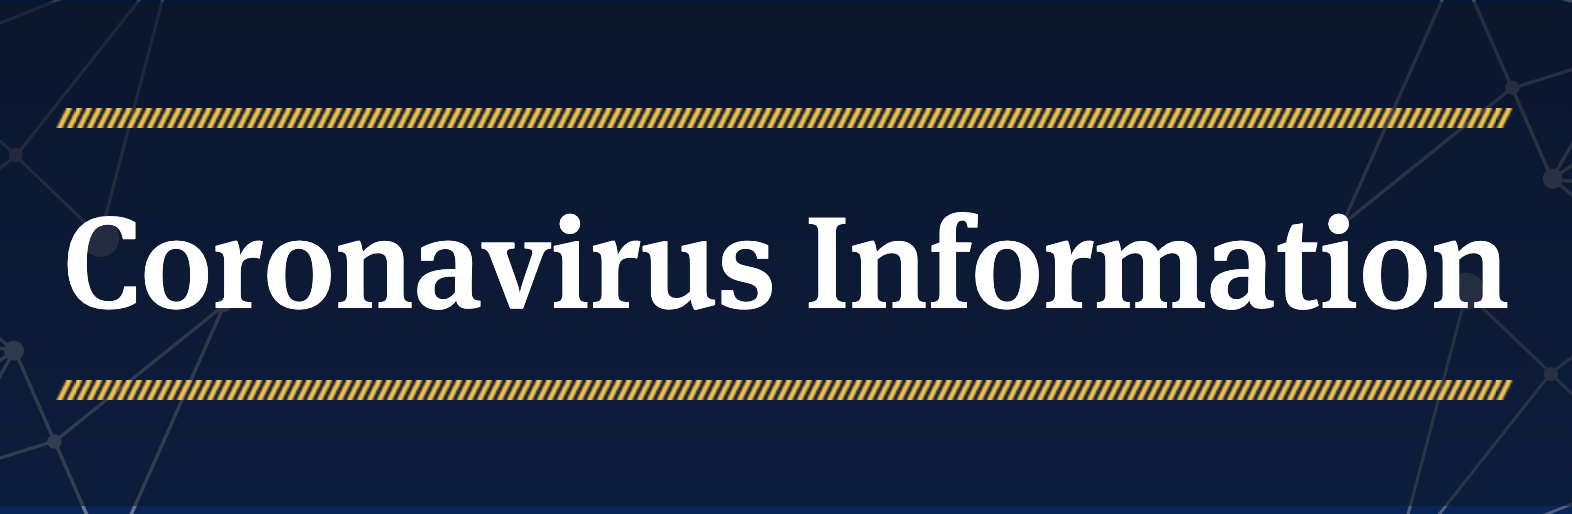 Banner that reads "Coronavirus Information"